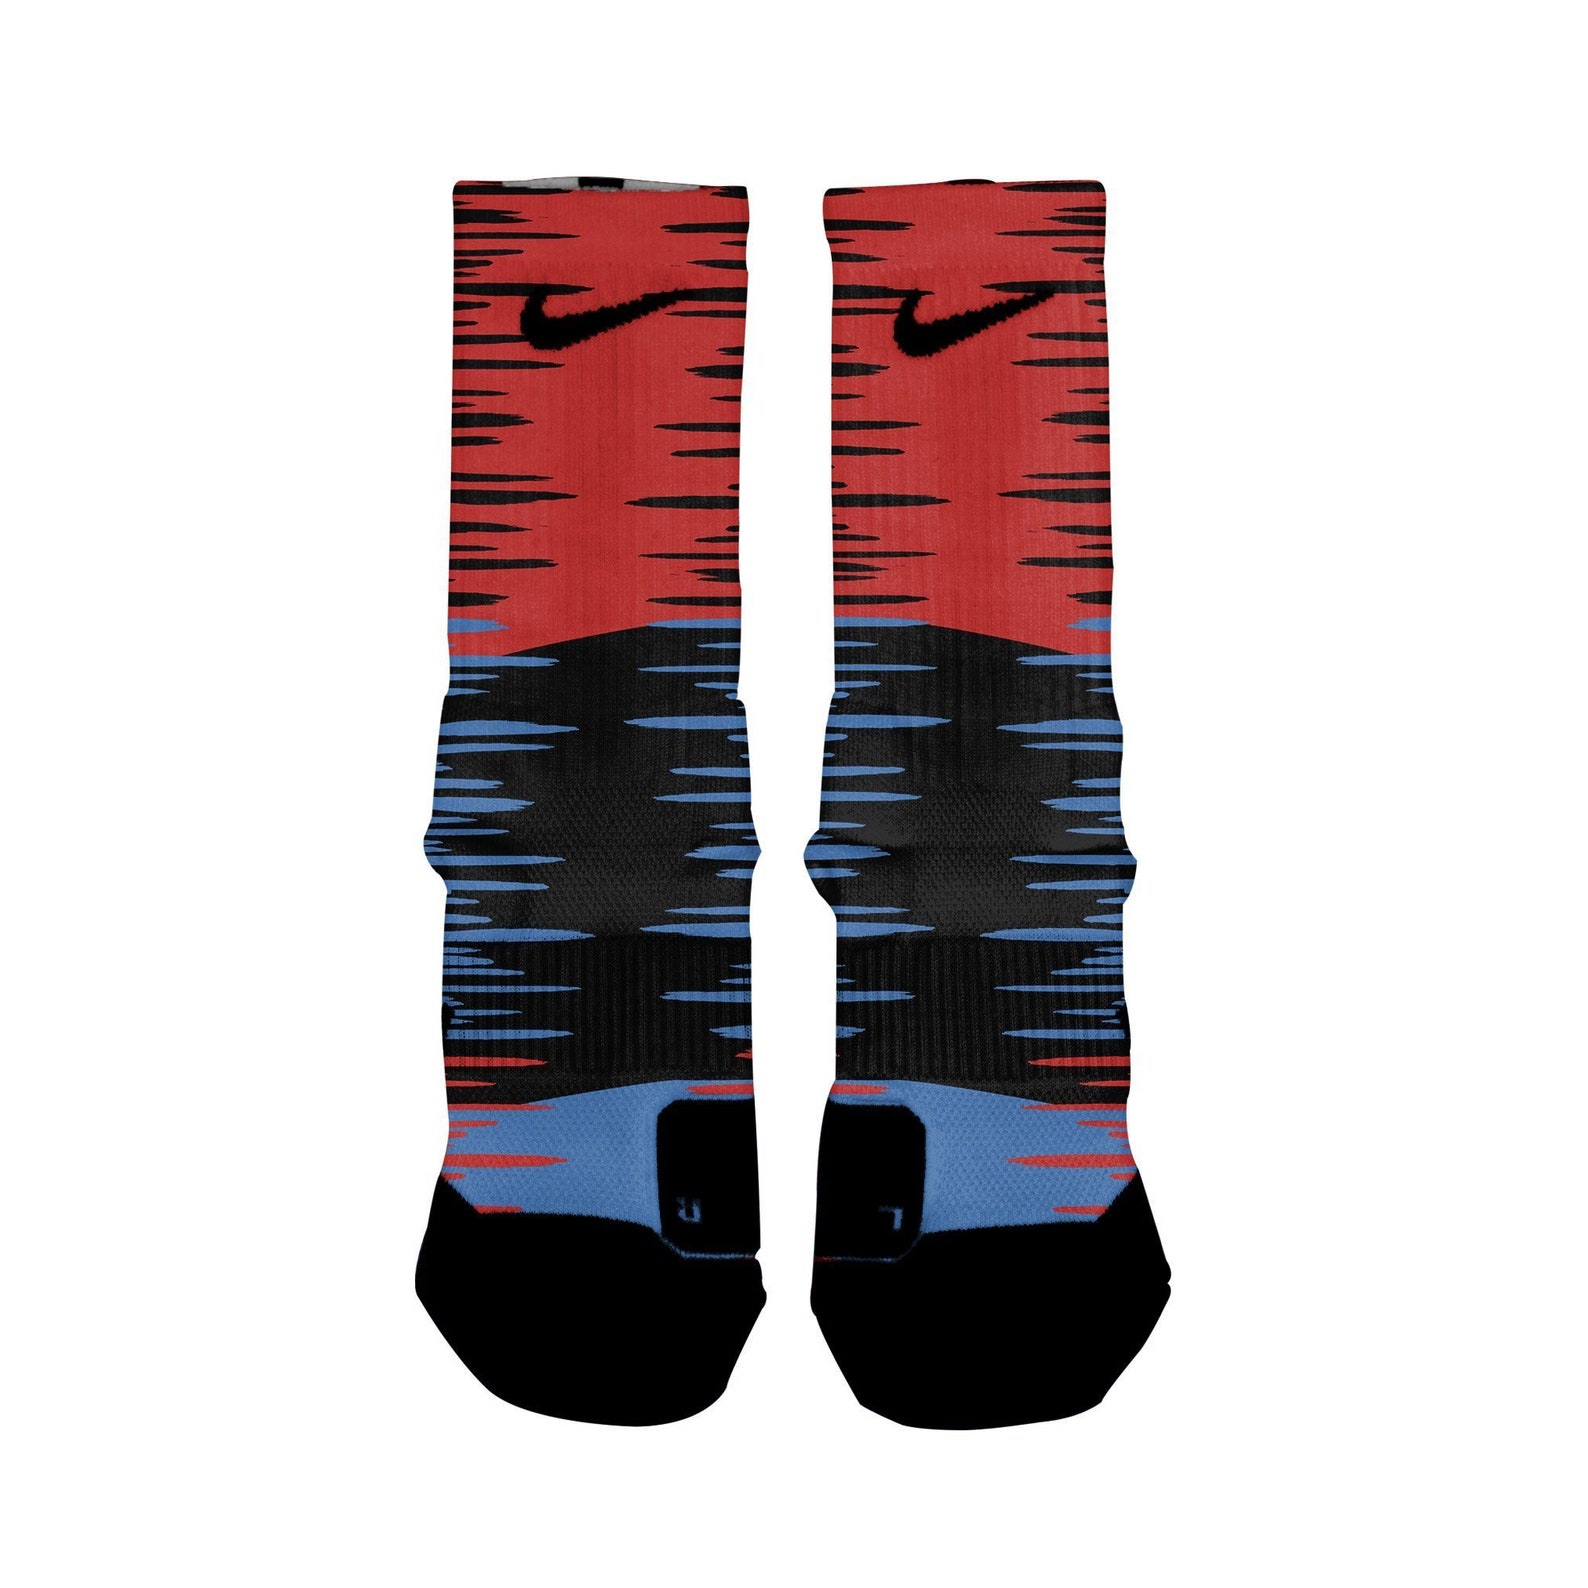 SPIKES Custom Nike Elite Socks All Shoe Sizes Perfect Funny | Etsy